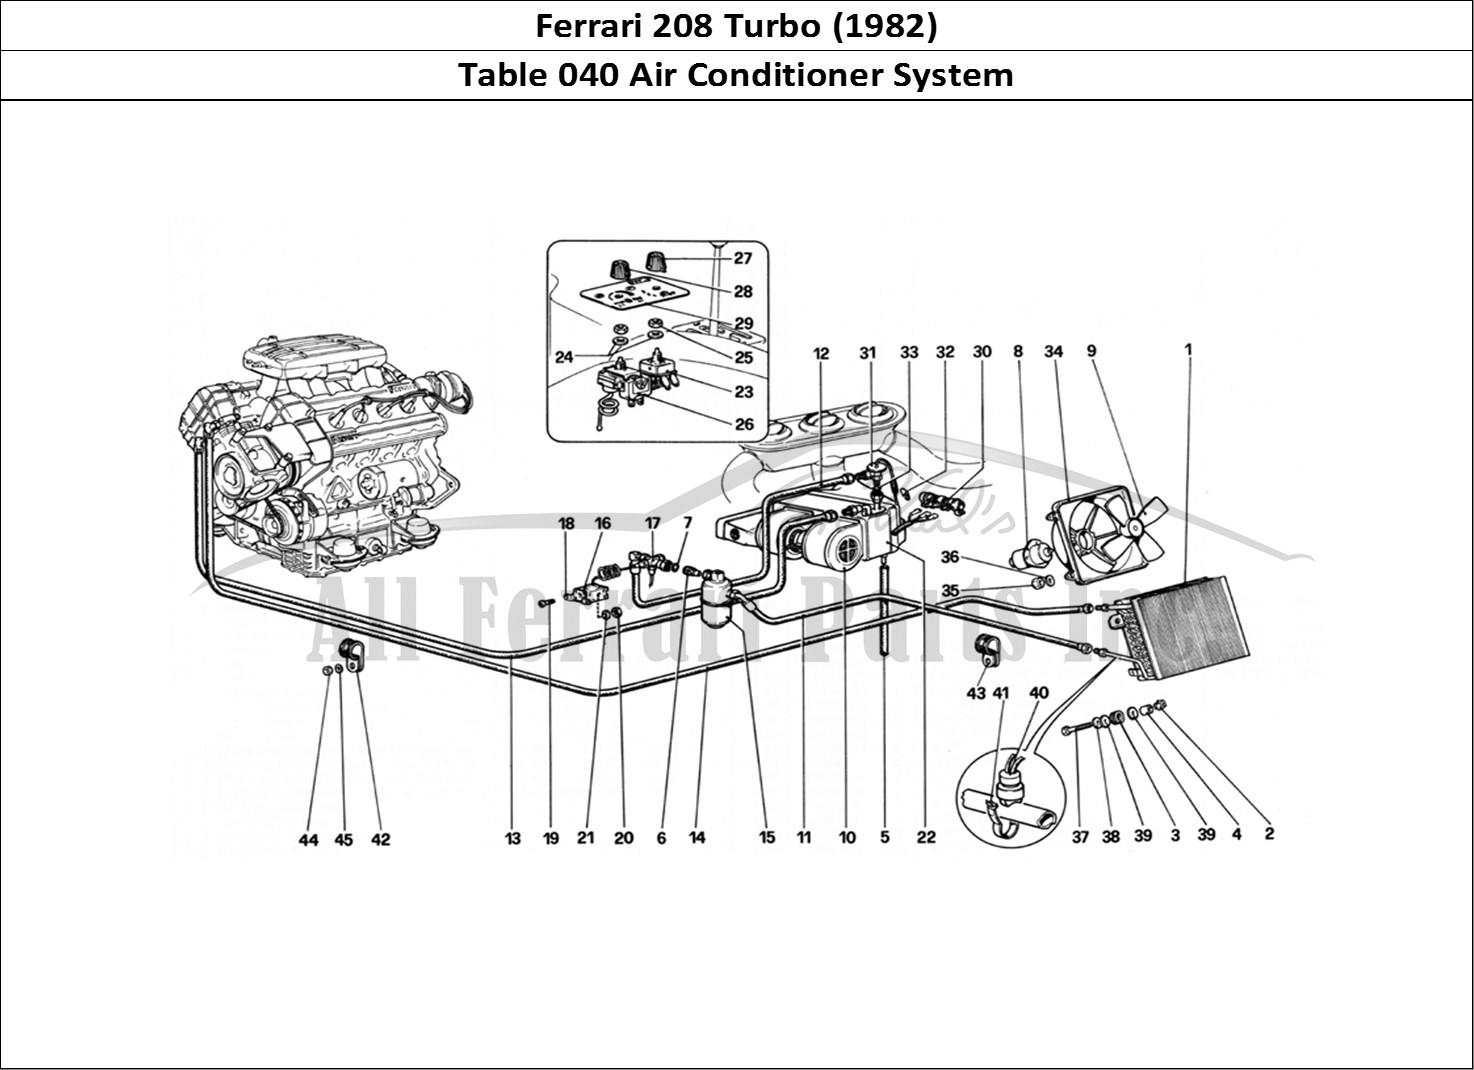 Ferrari Parts Ferrari 208 Turbo (1982) Page 040 Air Conditioning System